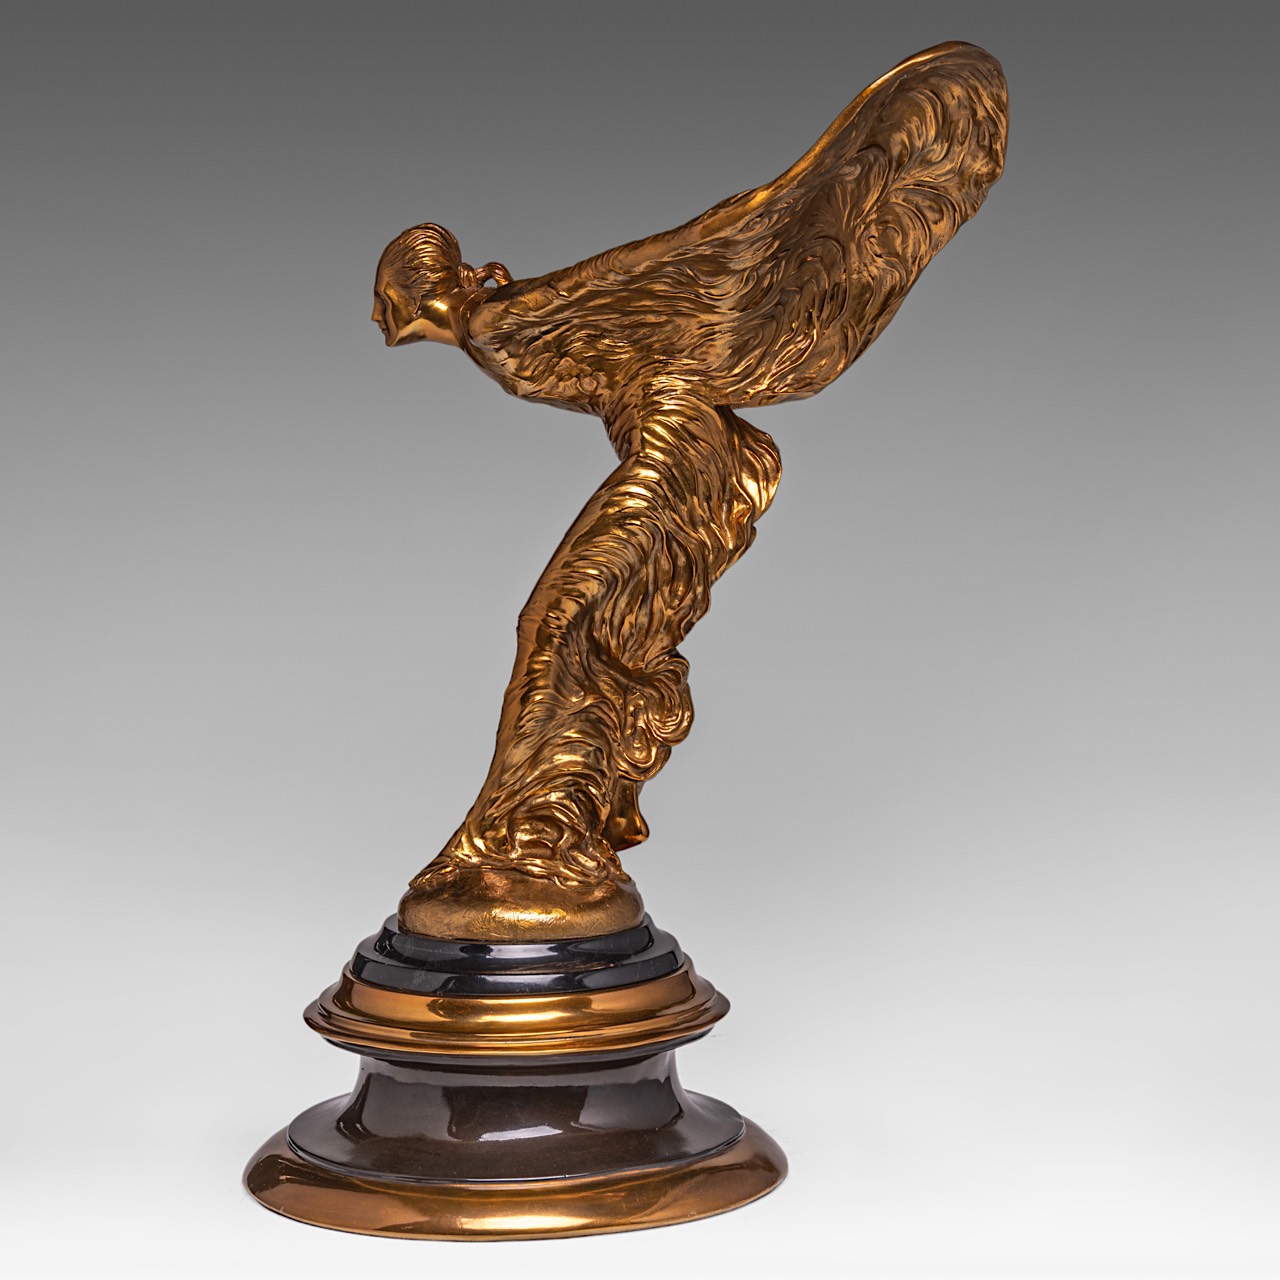 Charles Sykes (1875-1950), gilt bronze sculpture of the 'Spirit of Ecstasy', Rolls-Royce, H 69 cm - Image 10 of 14